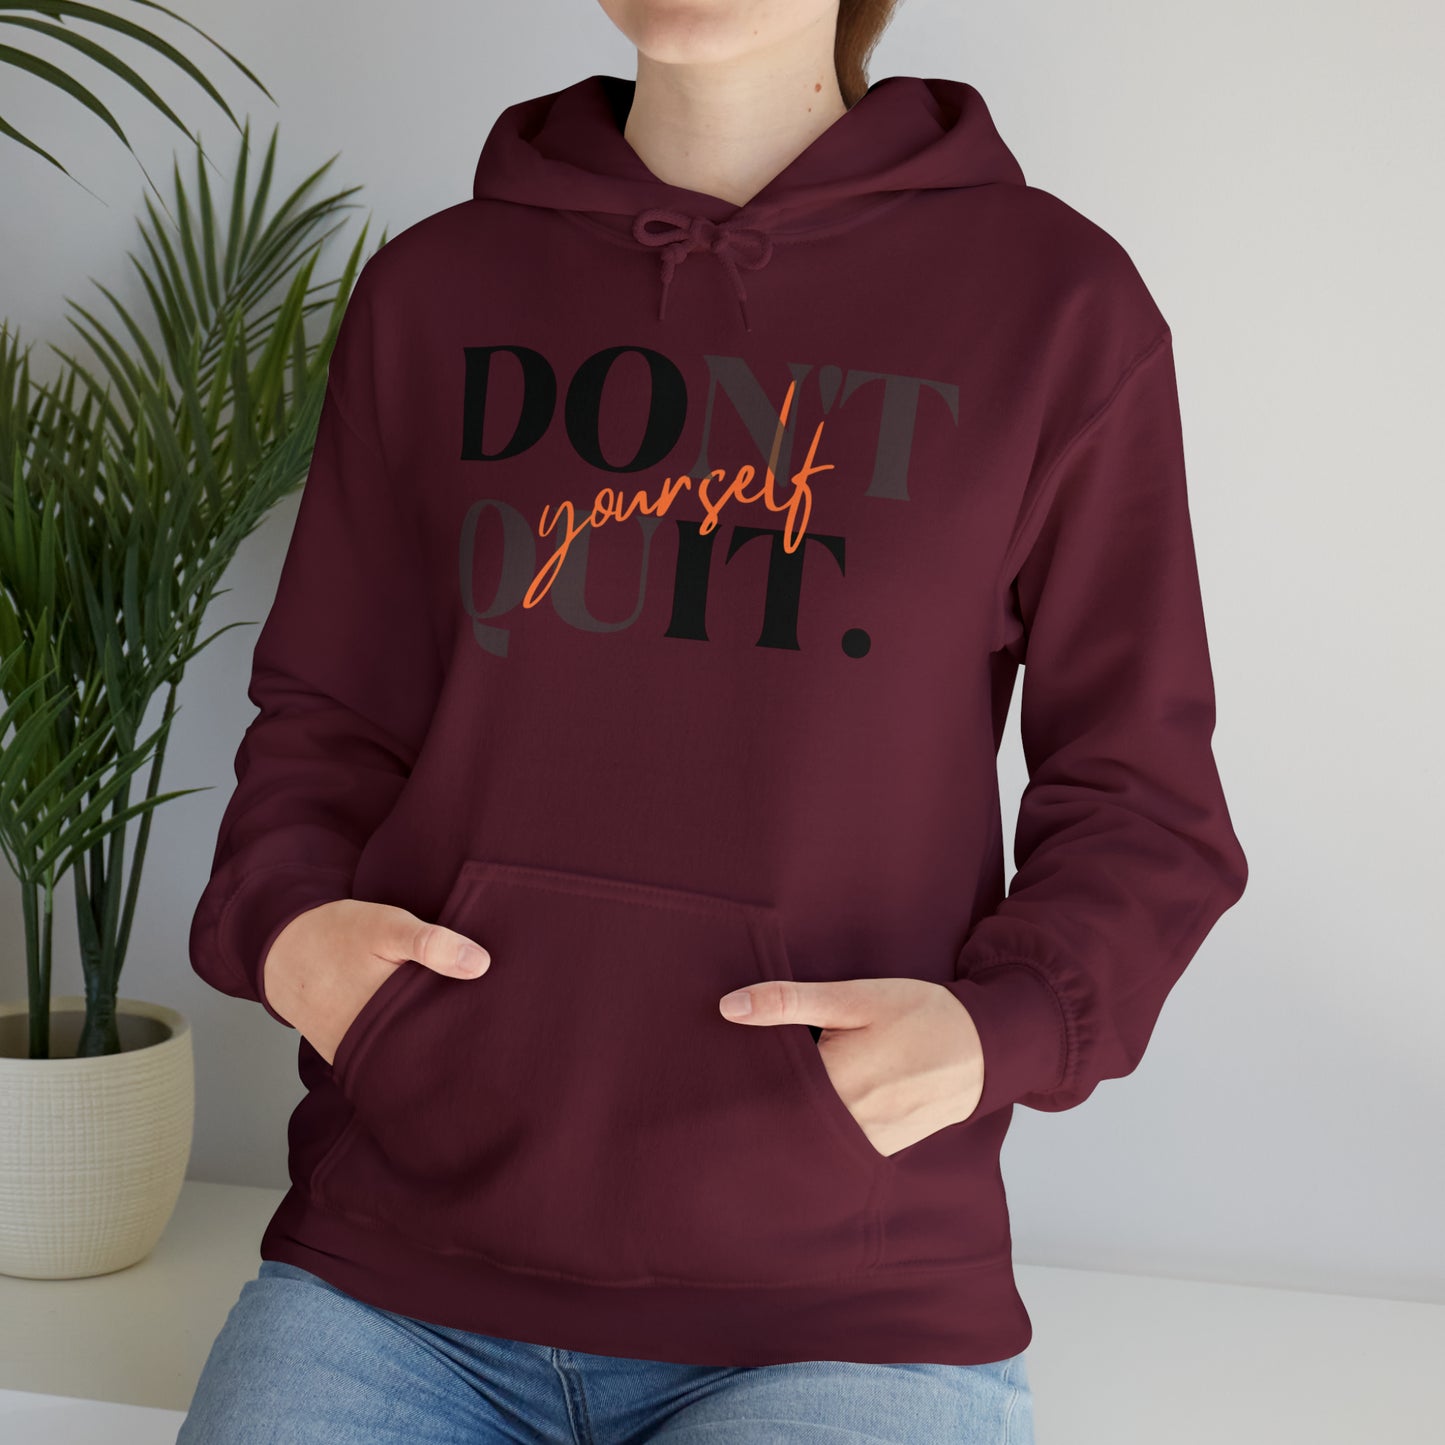 DON'T QUIT Unisex Heavy Blend™ Hooded Sweatshirt